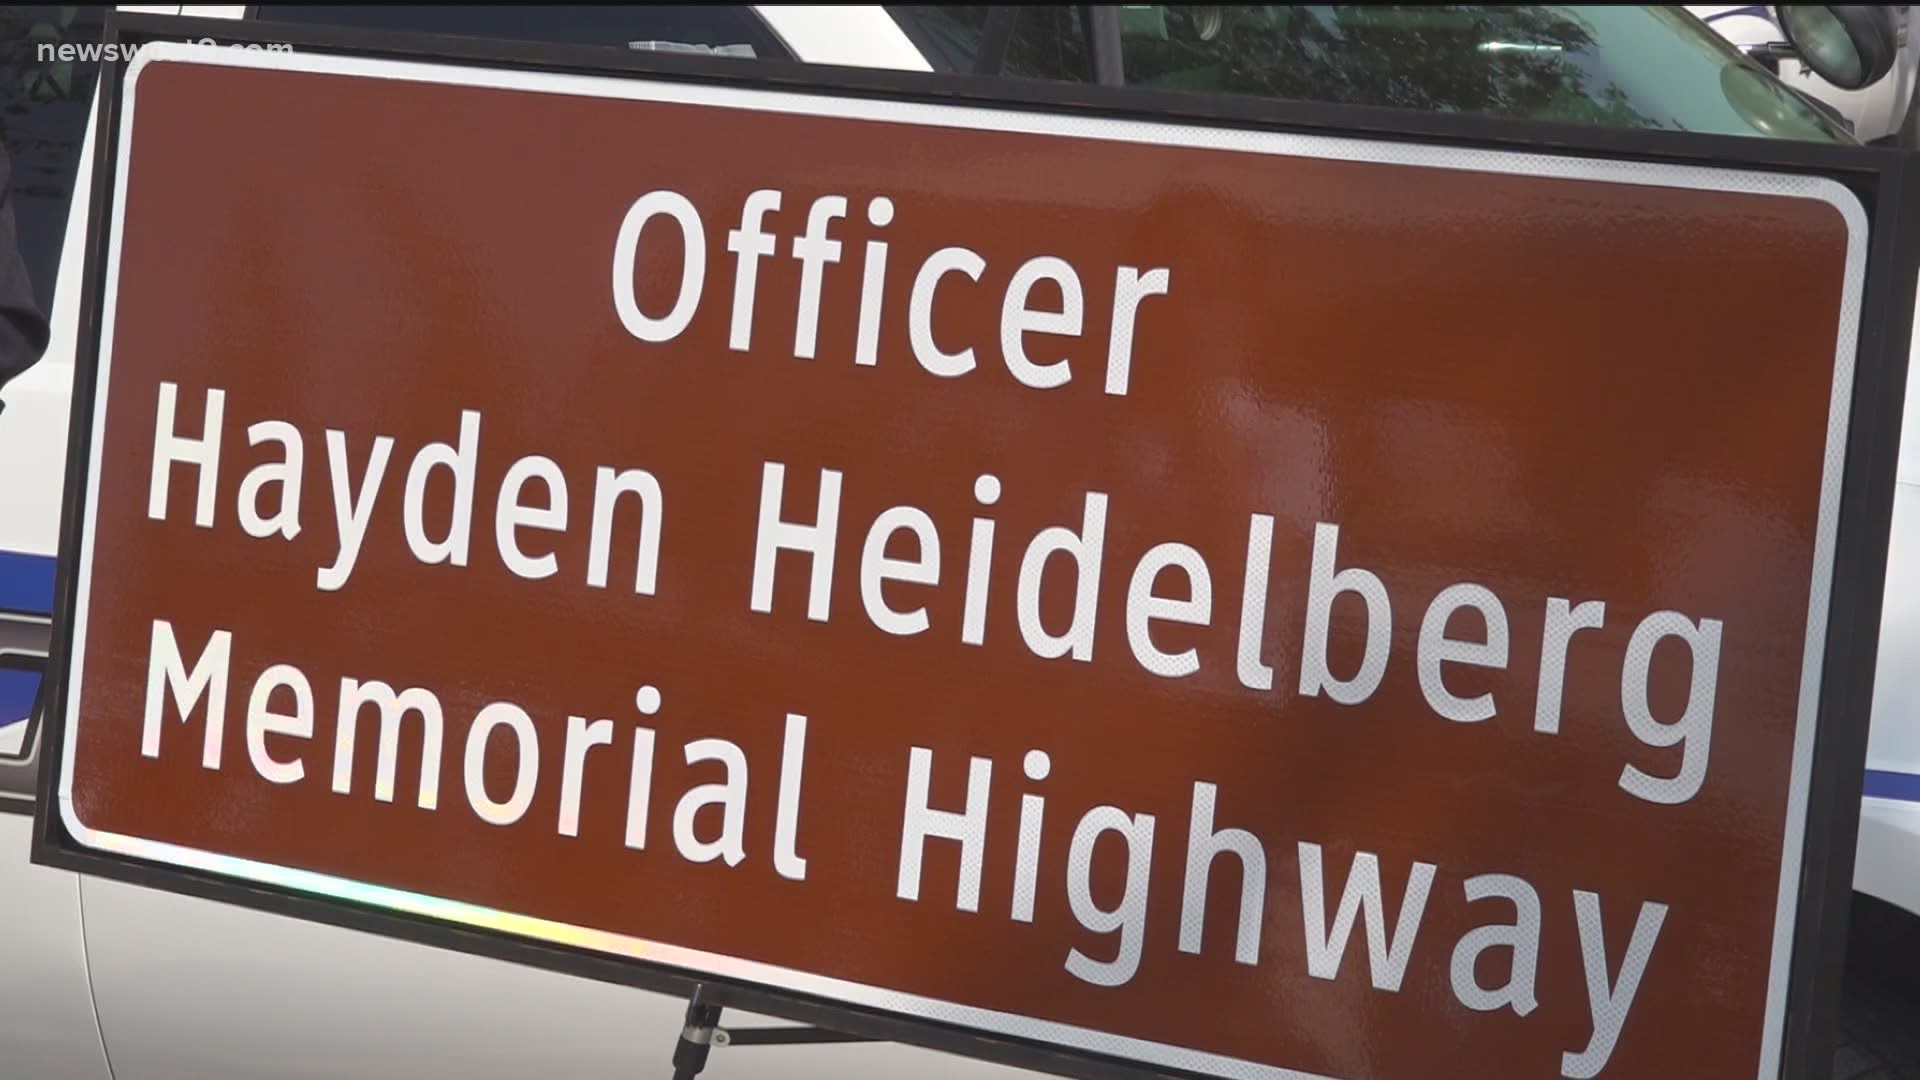 Heidelberg was killed in the line of duty in March 2019